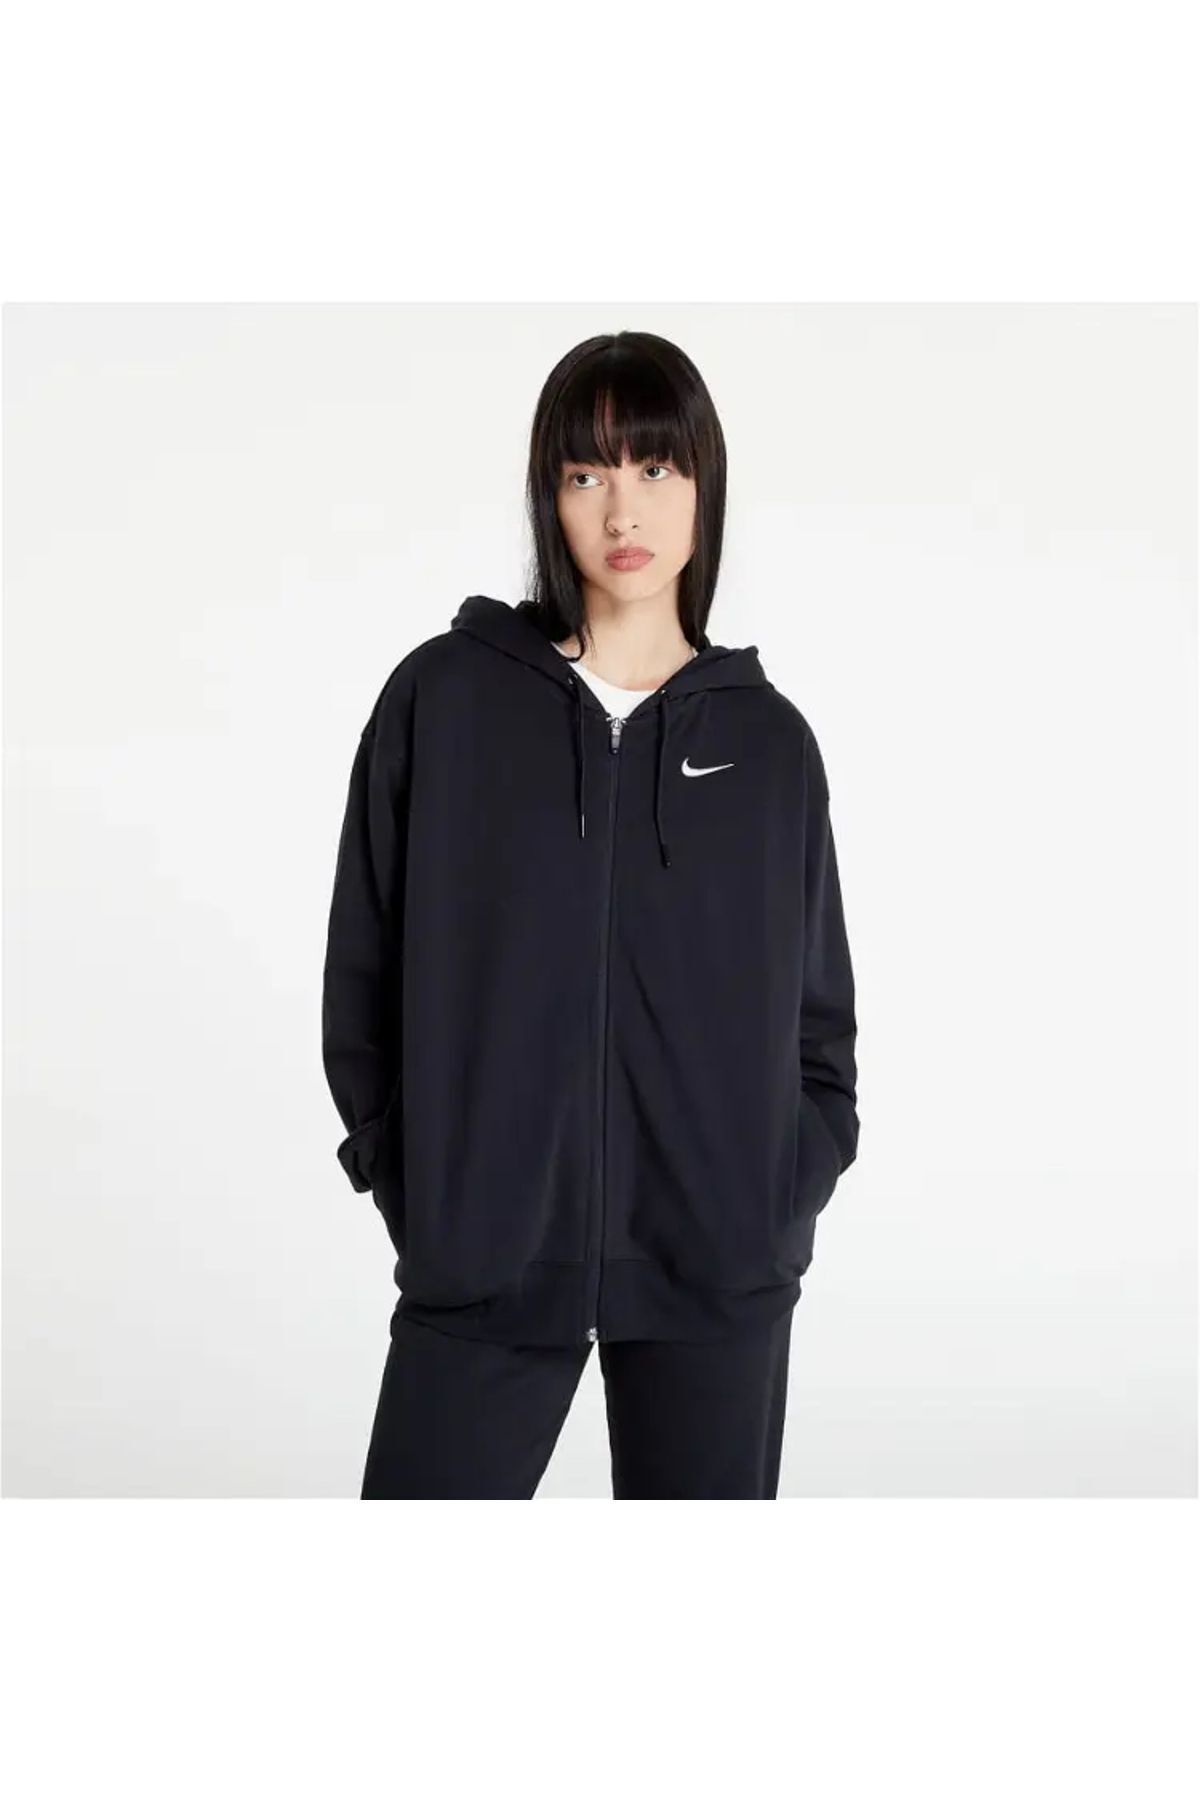 Nike Sportswear Jersey Hoodie Oversize Siyah Kadın Sweatshirt DM6415-010